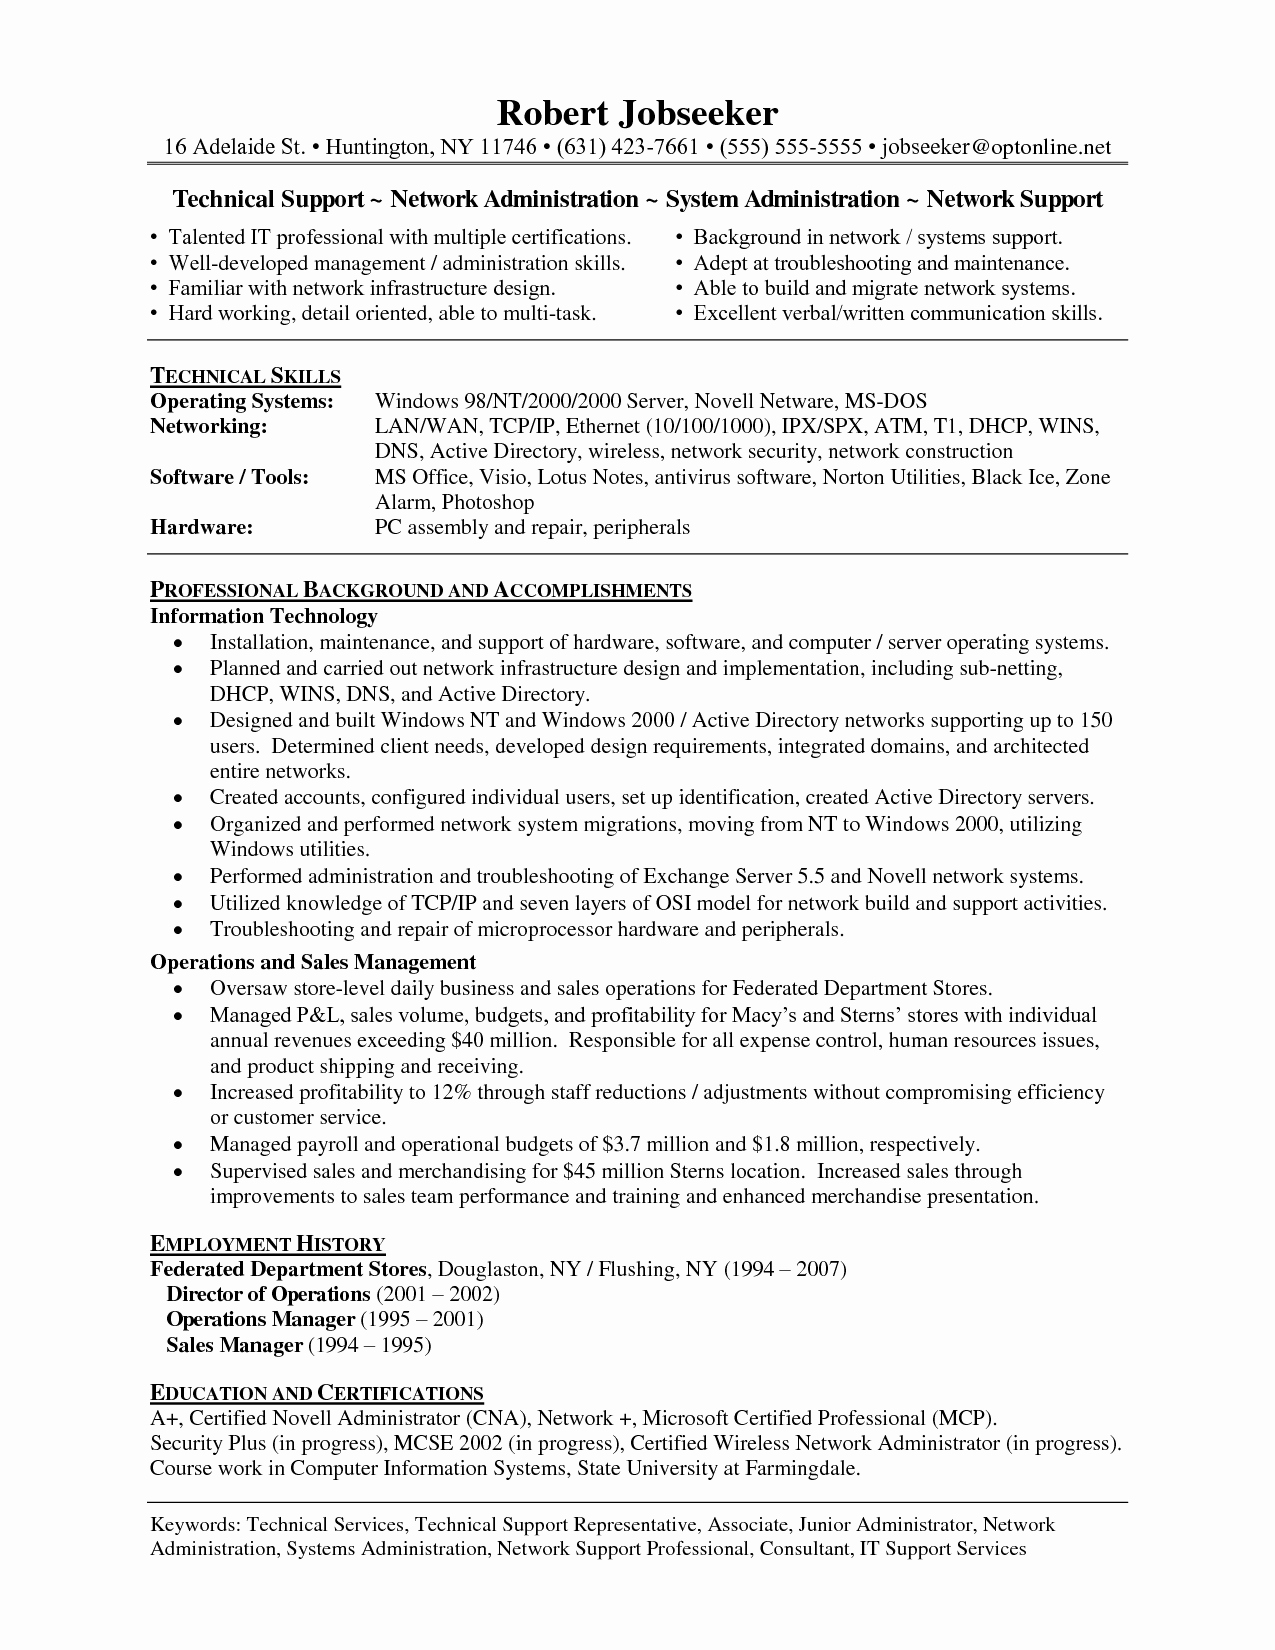 Electronic Technician Resume Summary